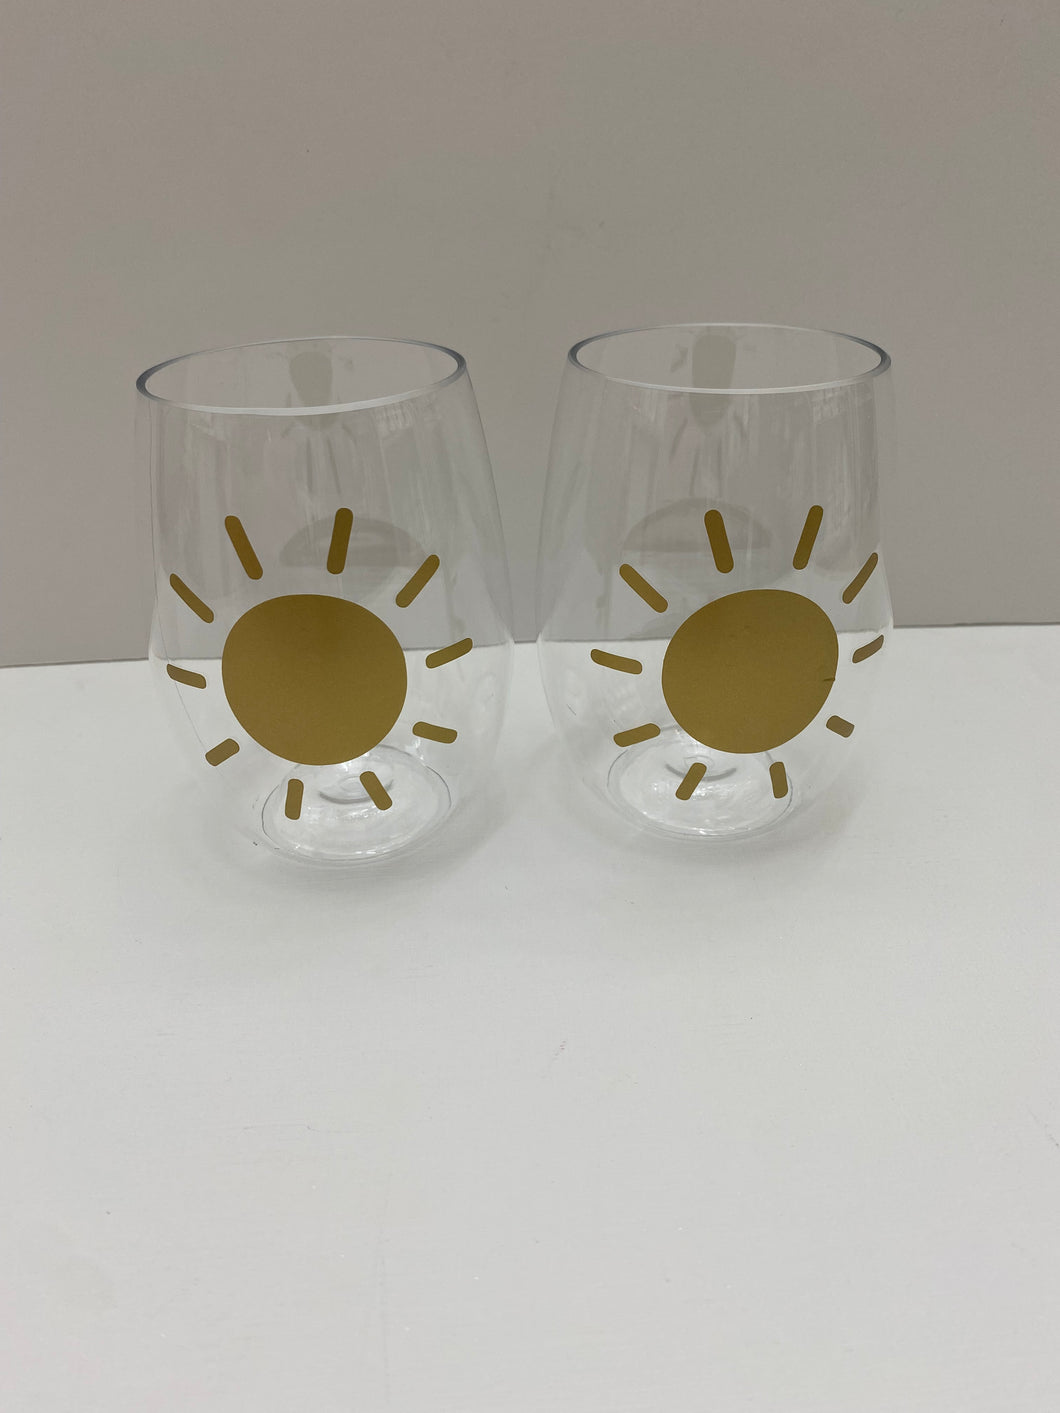 Sun Wine Glass